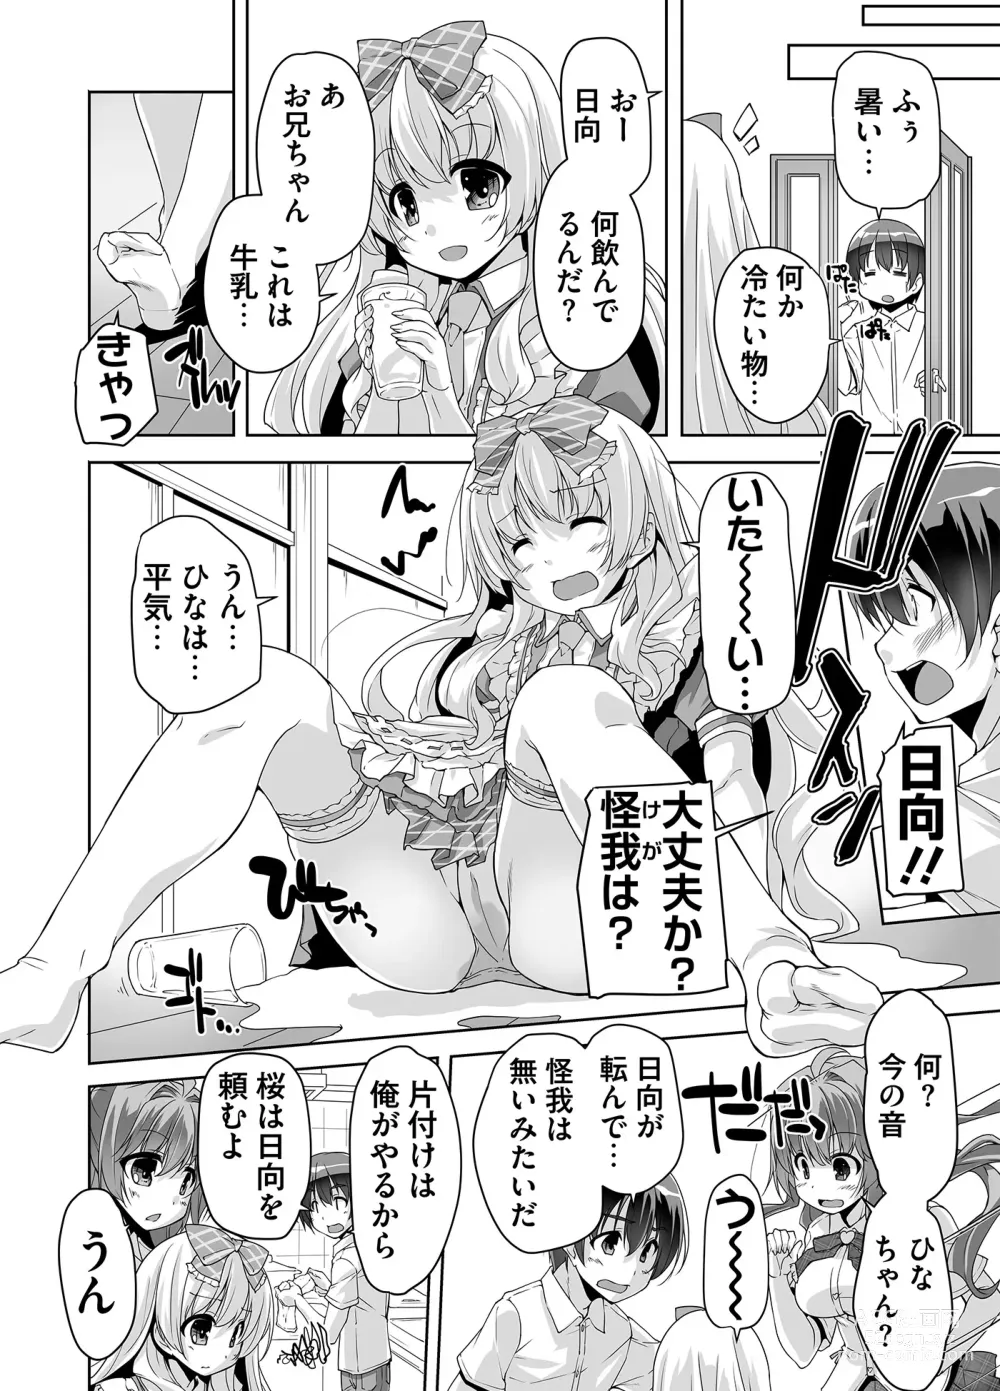 Page 8 of manga Imouto Paradise! 3 Adult Edition